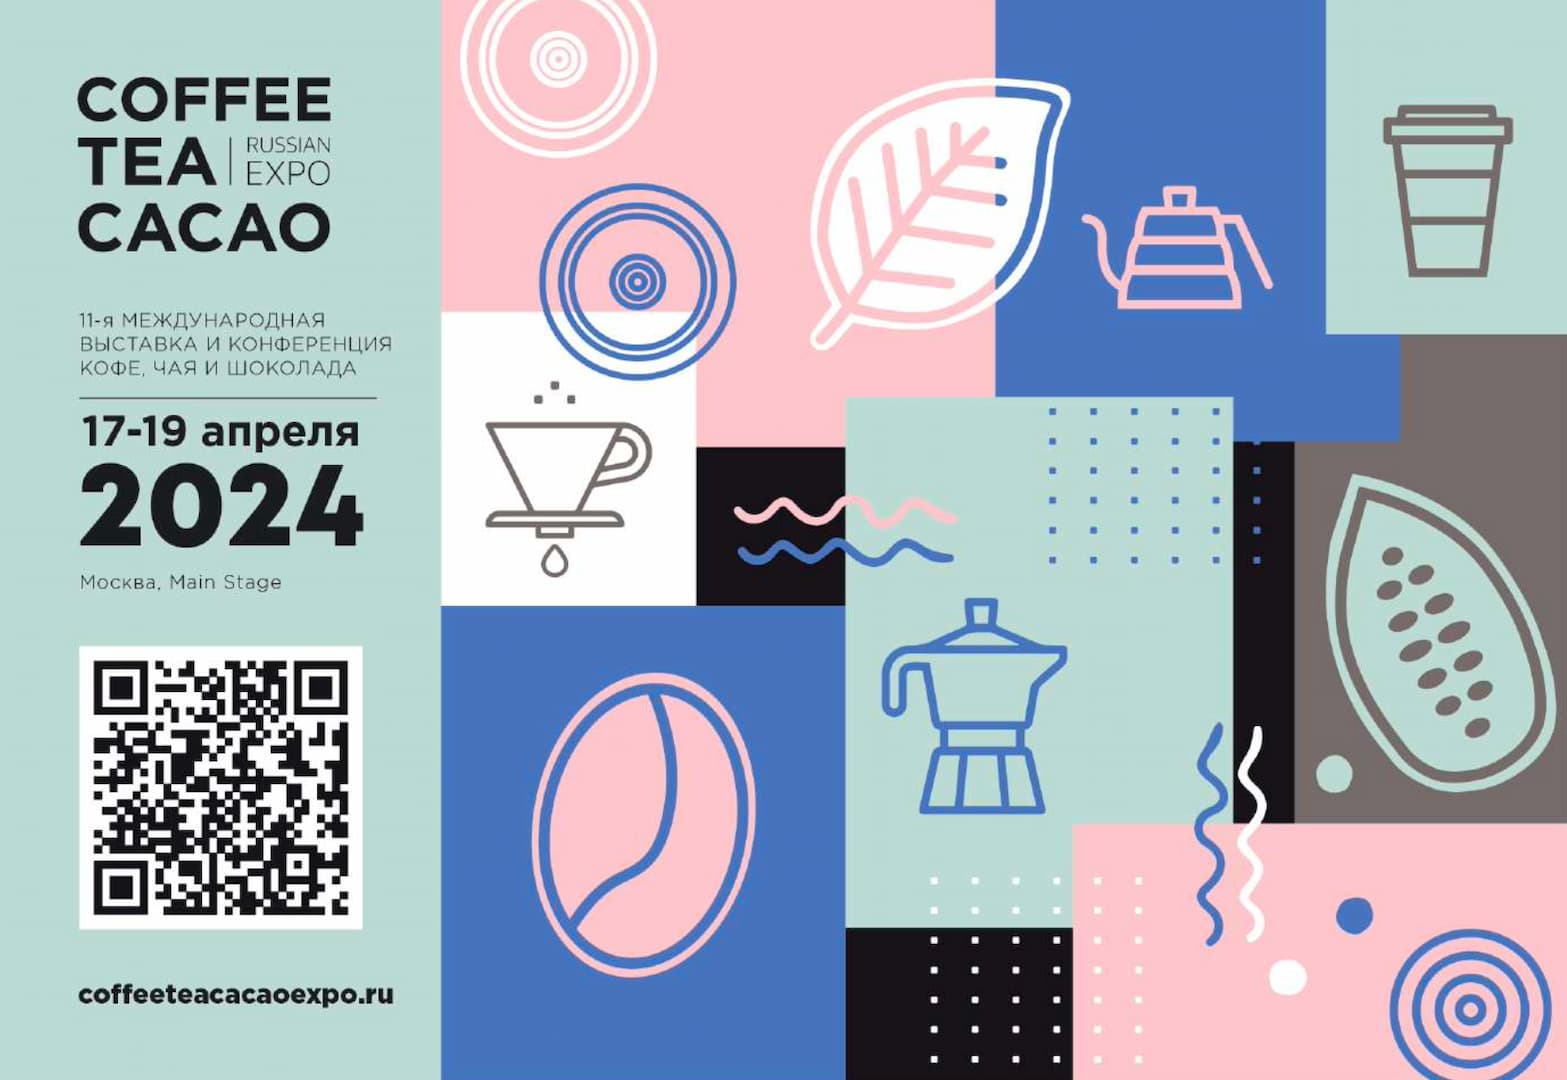 Cacao expo. Coffee Tea Cacao Expo. Чай кофе какао выставка 2023. Кофе экспозиция. Coffee Tea Cacao Russian Expo 2024.